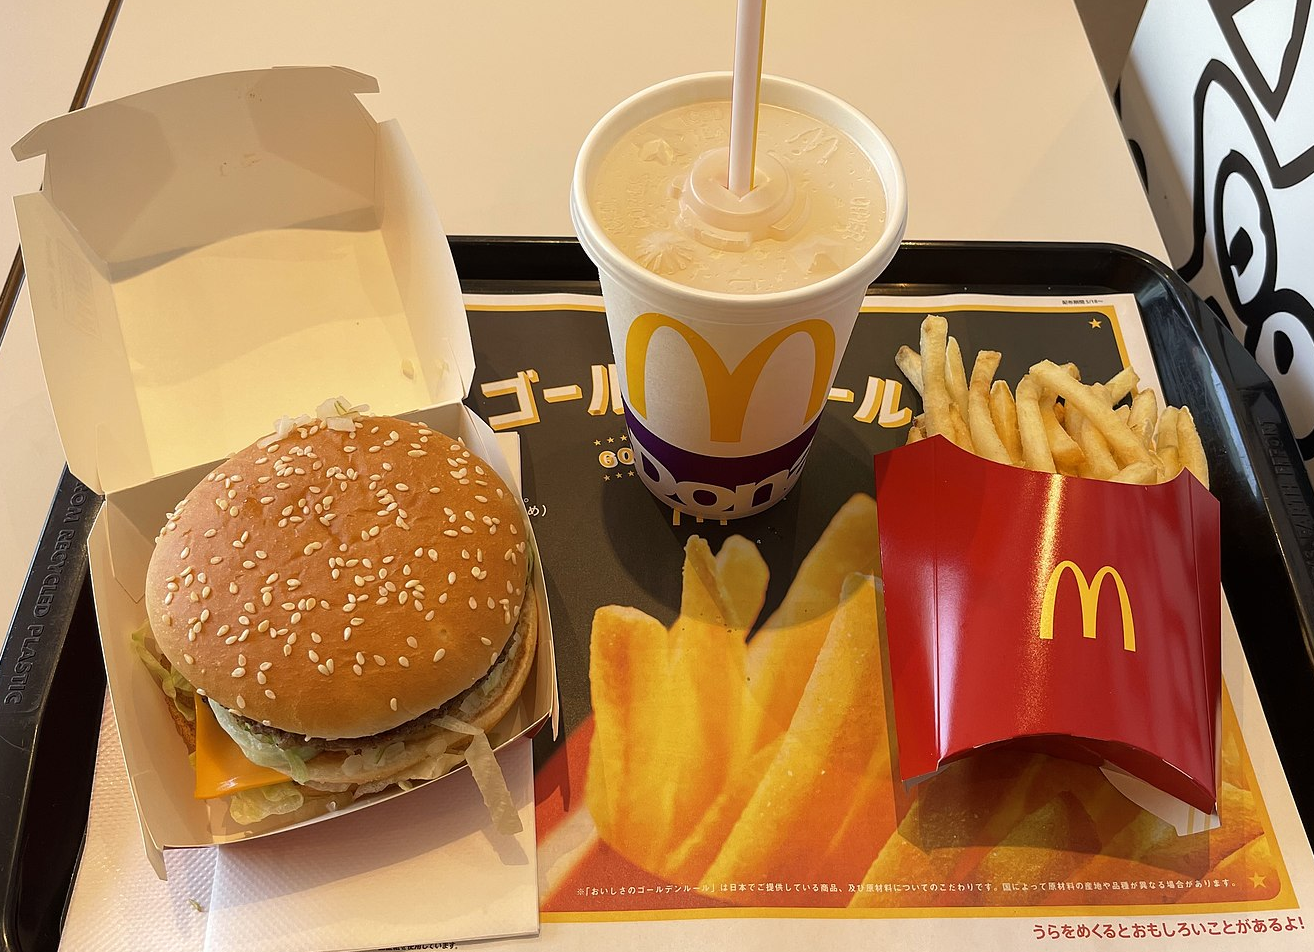 File:McDonald’s Big Mac meal